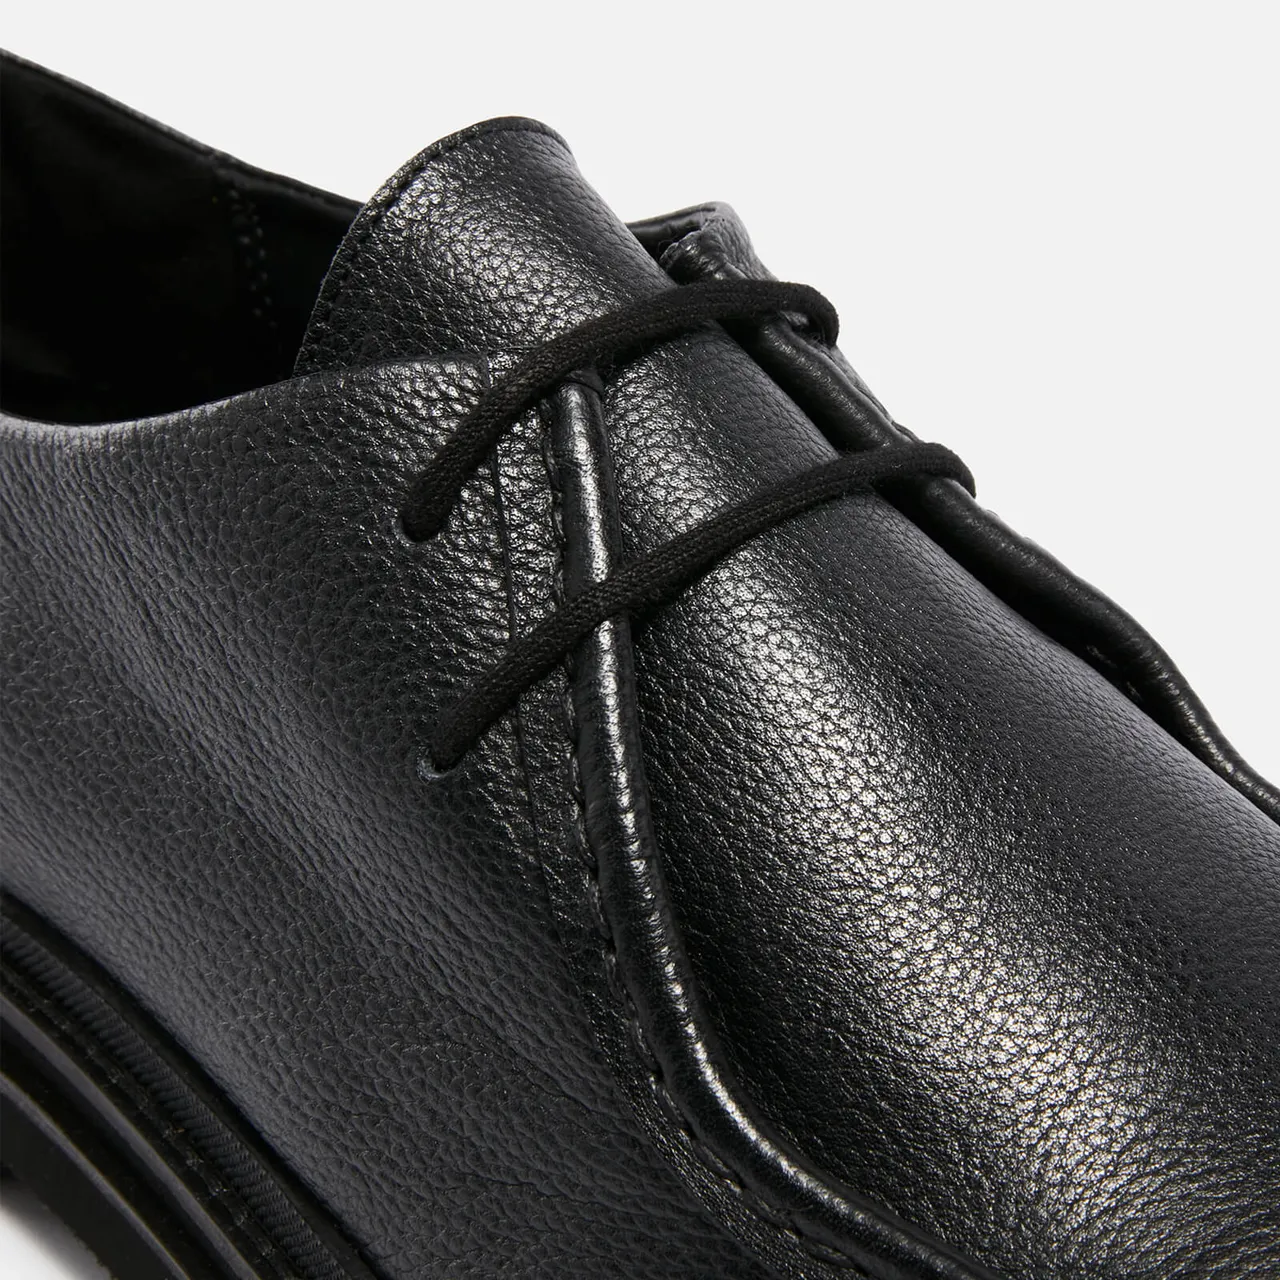 Walk London Men's Brooklyn Apron Pebbled Leather Shoes - UK